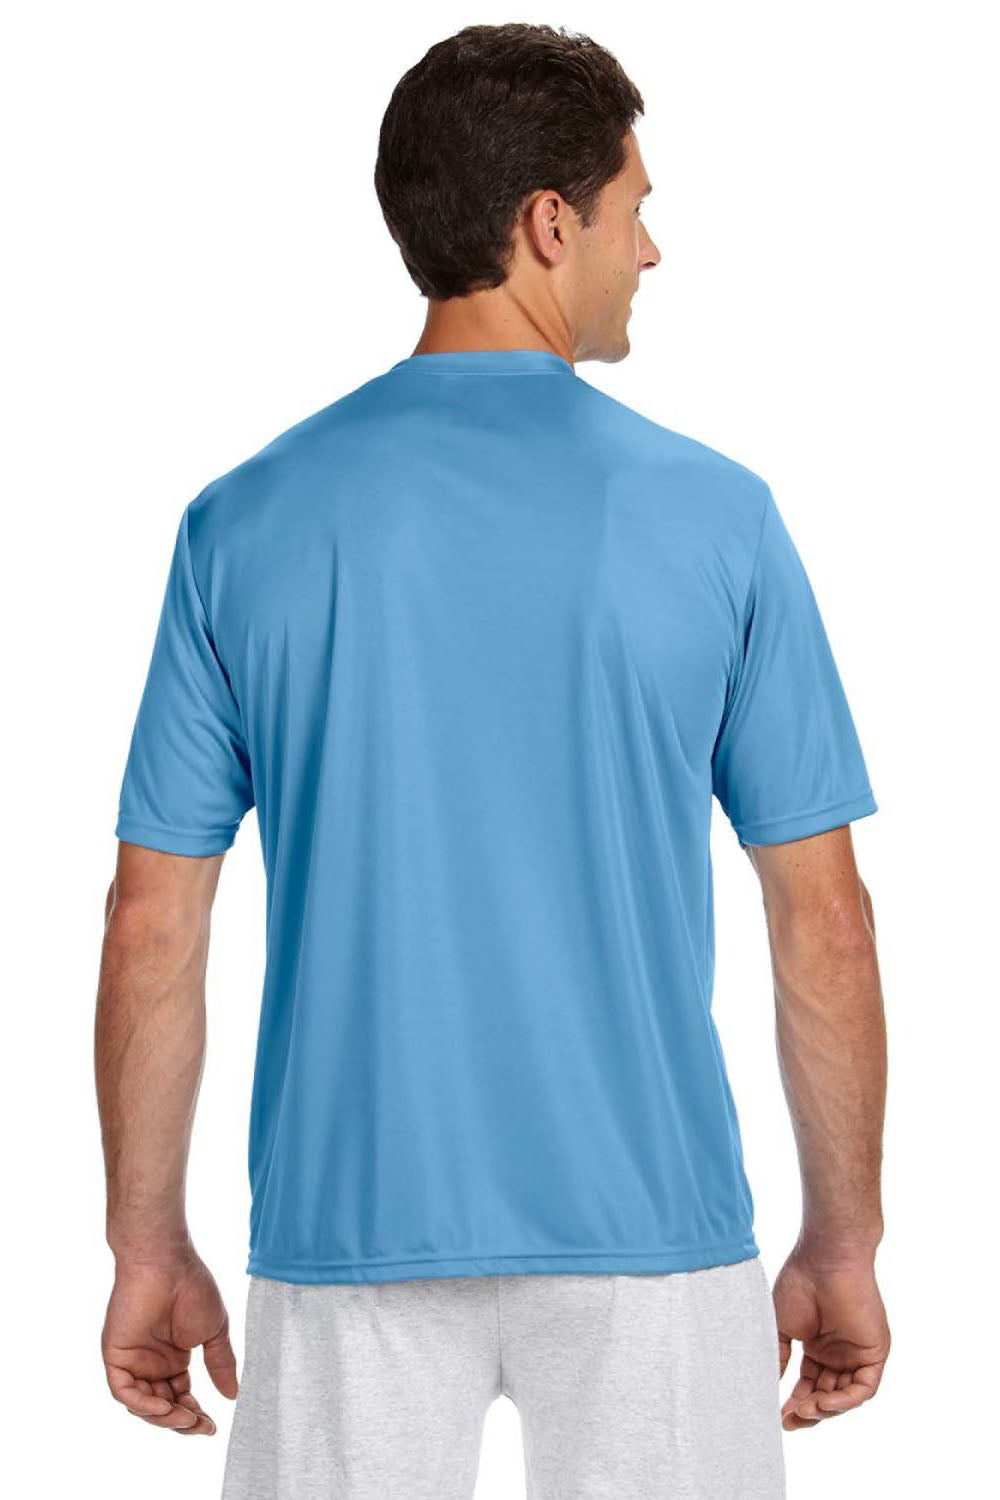 A4 N3142 Mens Performance Moisture Wicking Short Sleeve Crewneck T-Shirt Light Blue Model Back